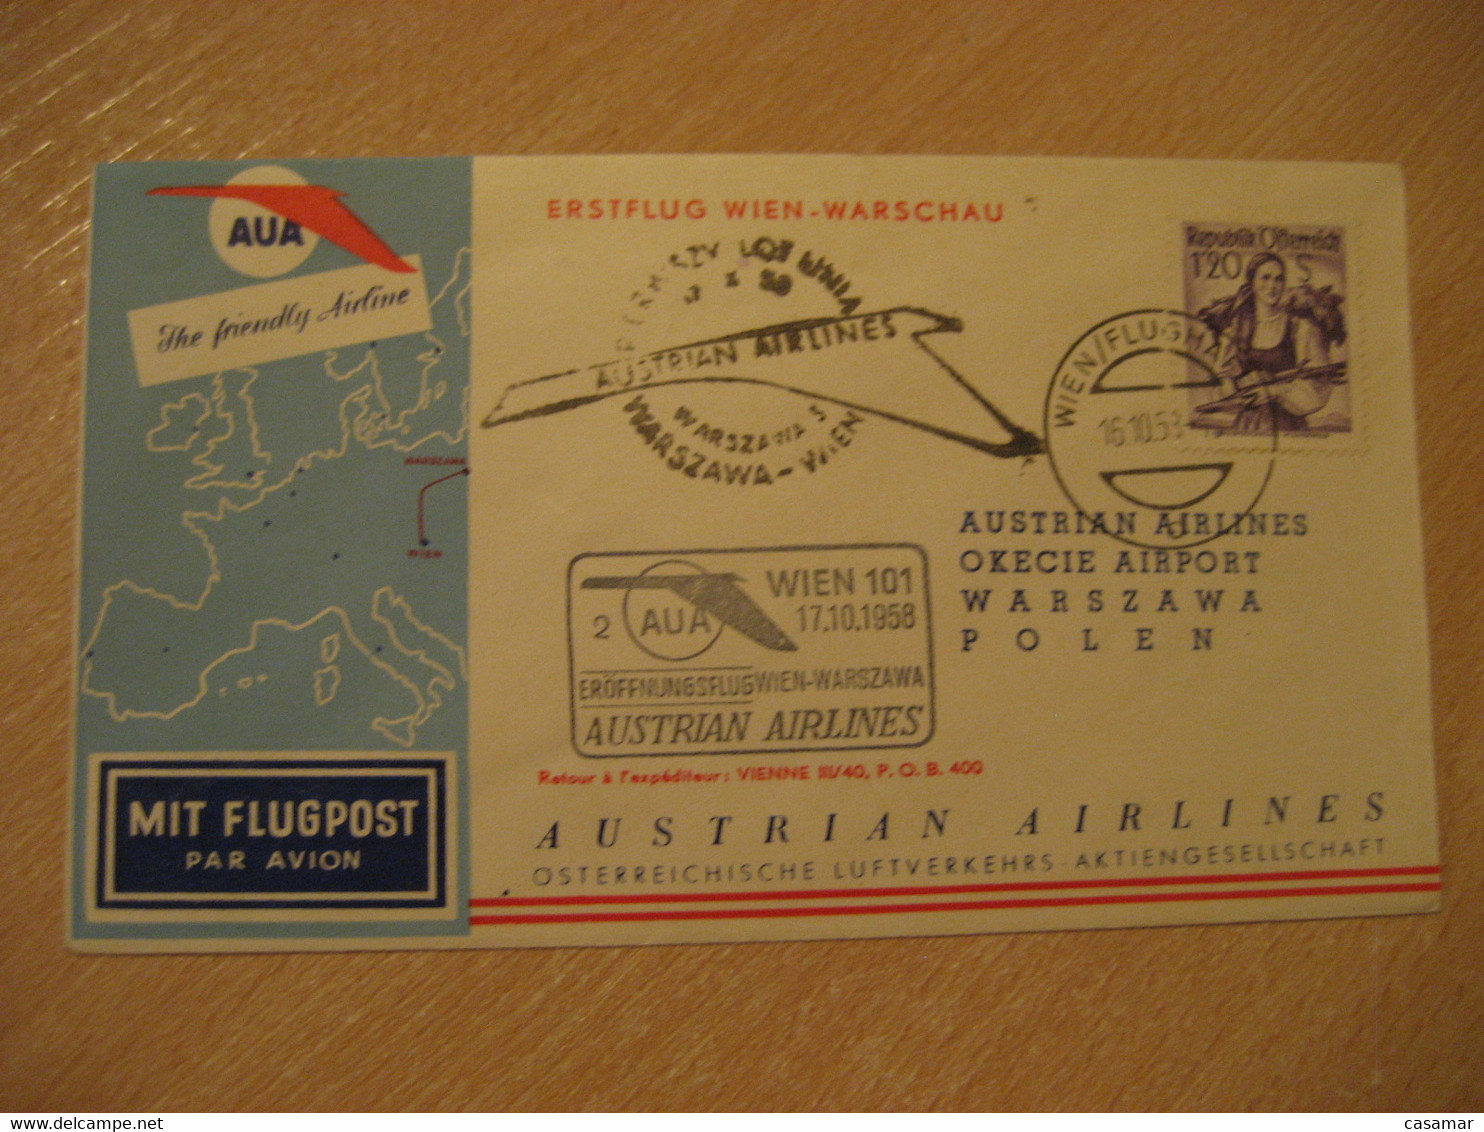 WARSZAWA Warsaw Wien 1958 AUA Austrian Airlines Airline First Flight Cancel Cover POLAND AUSTRIA - Flugzeuge